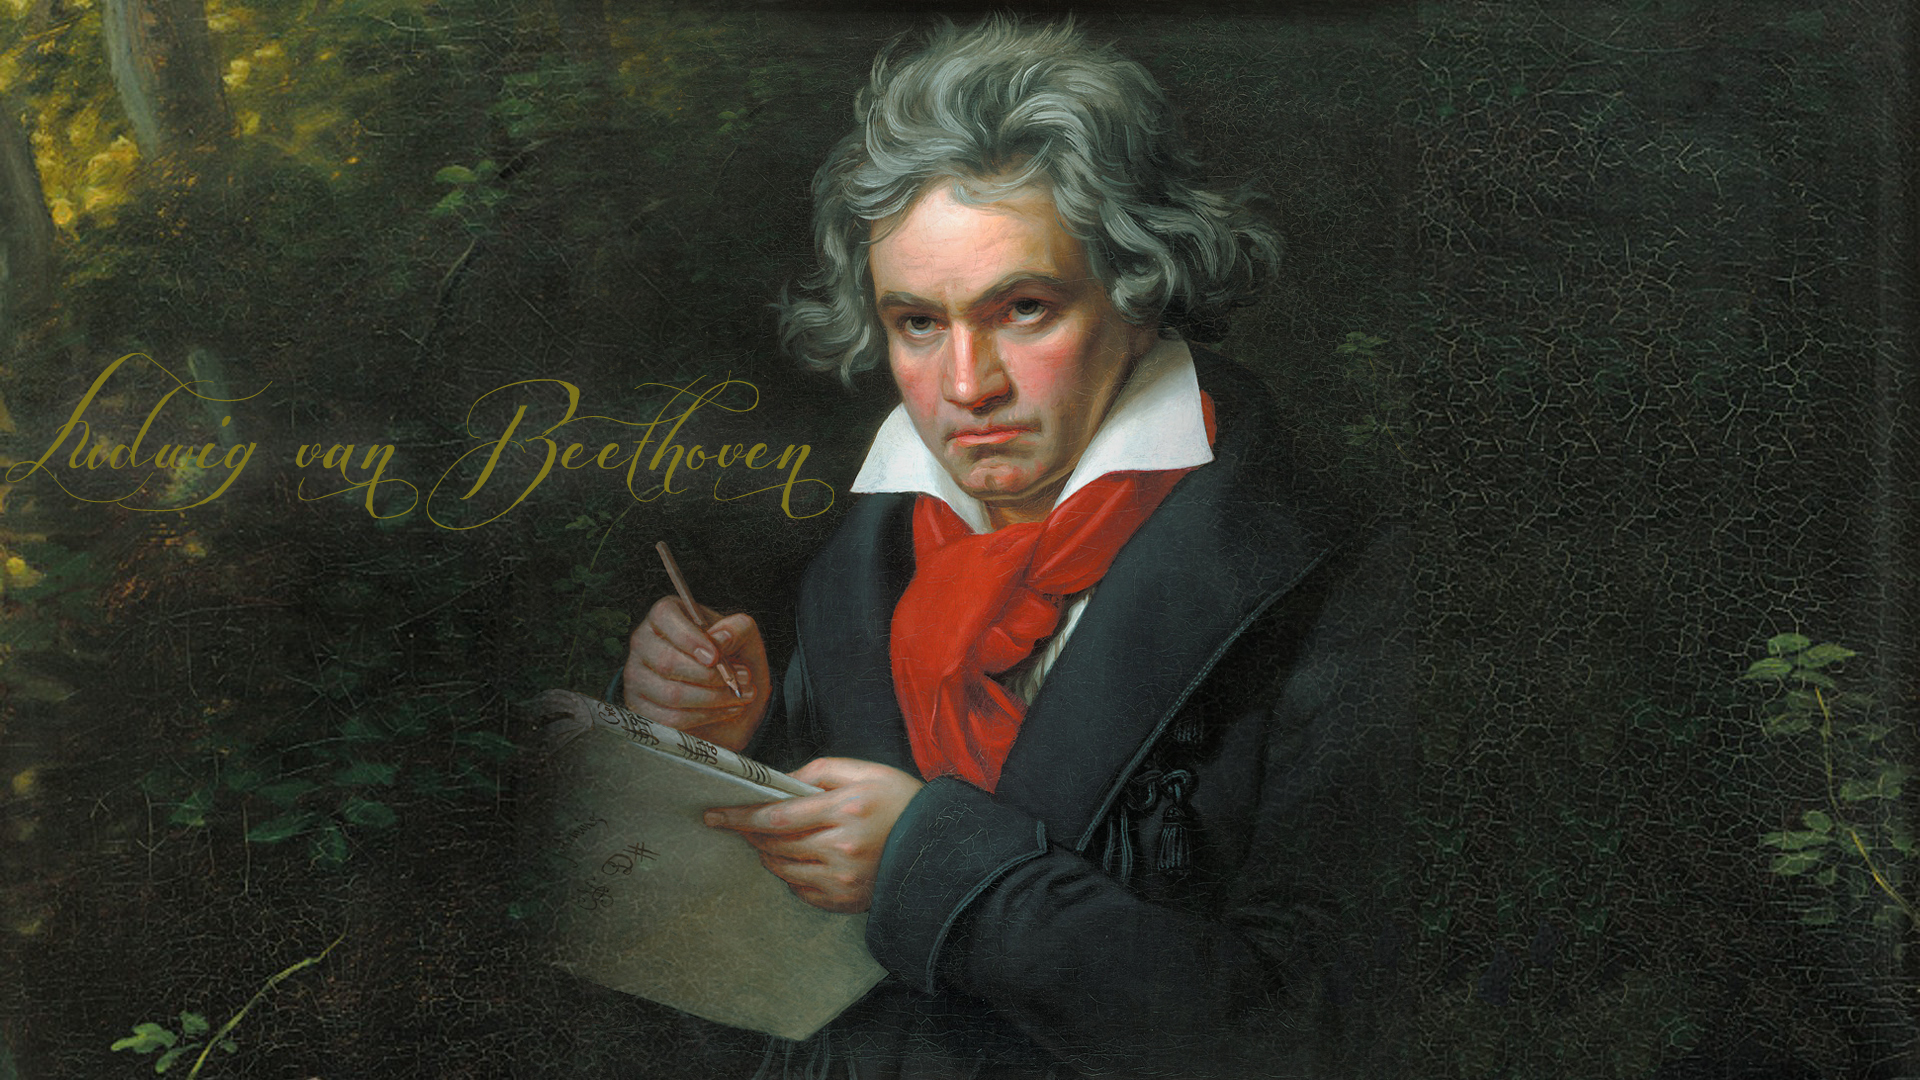 Beethoven Wallpaper